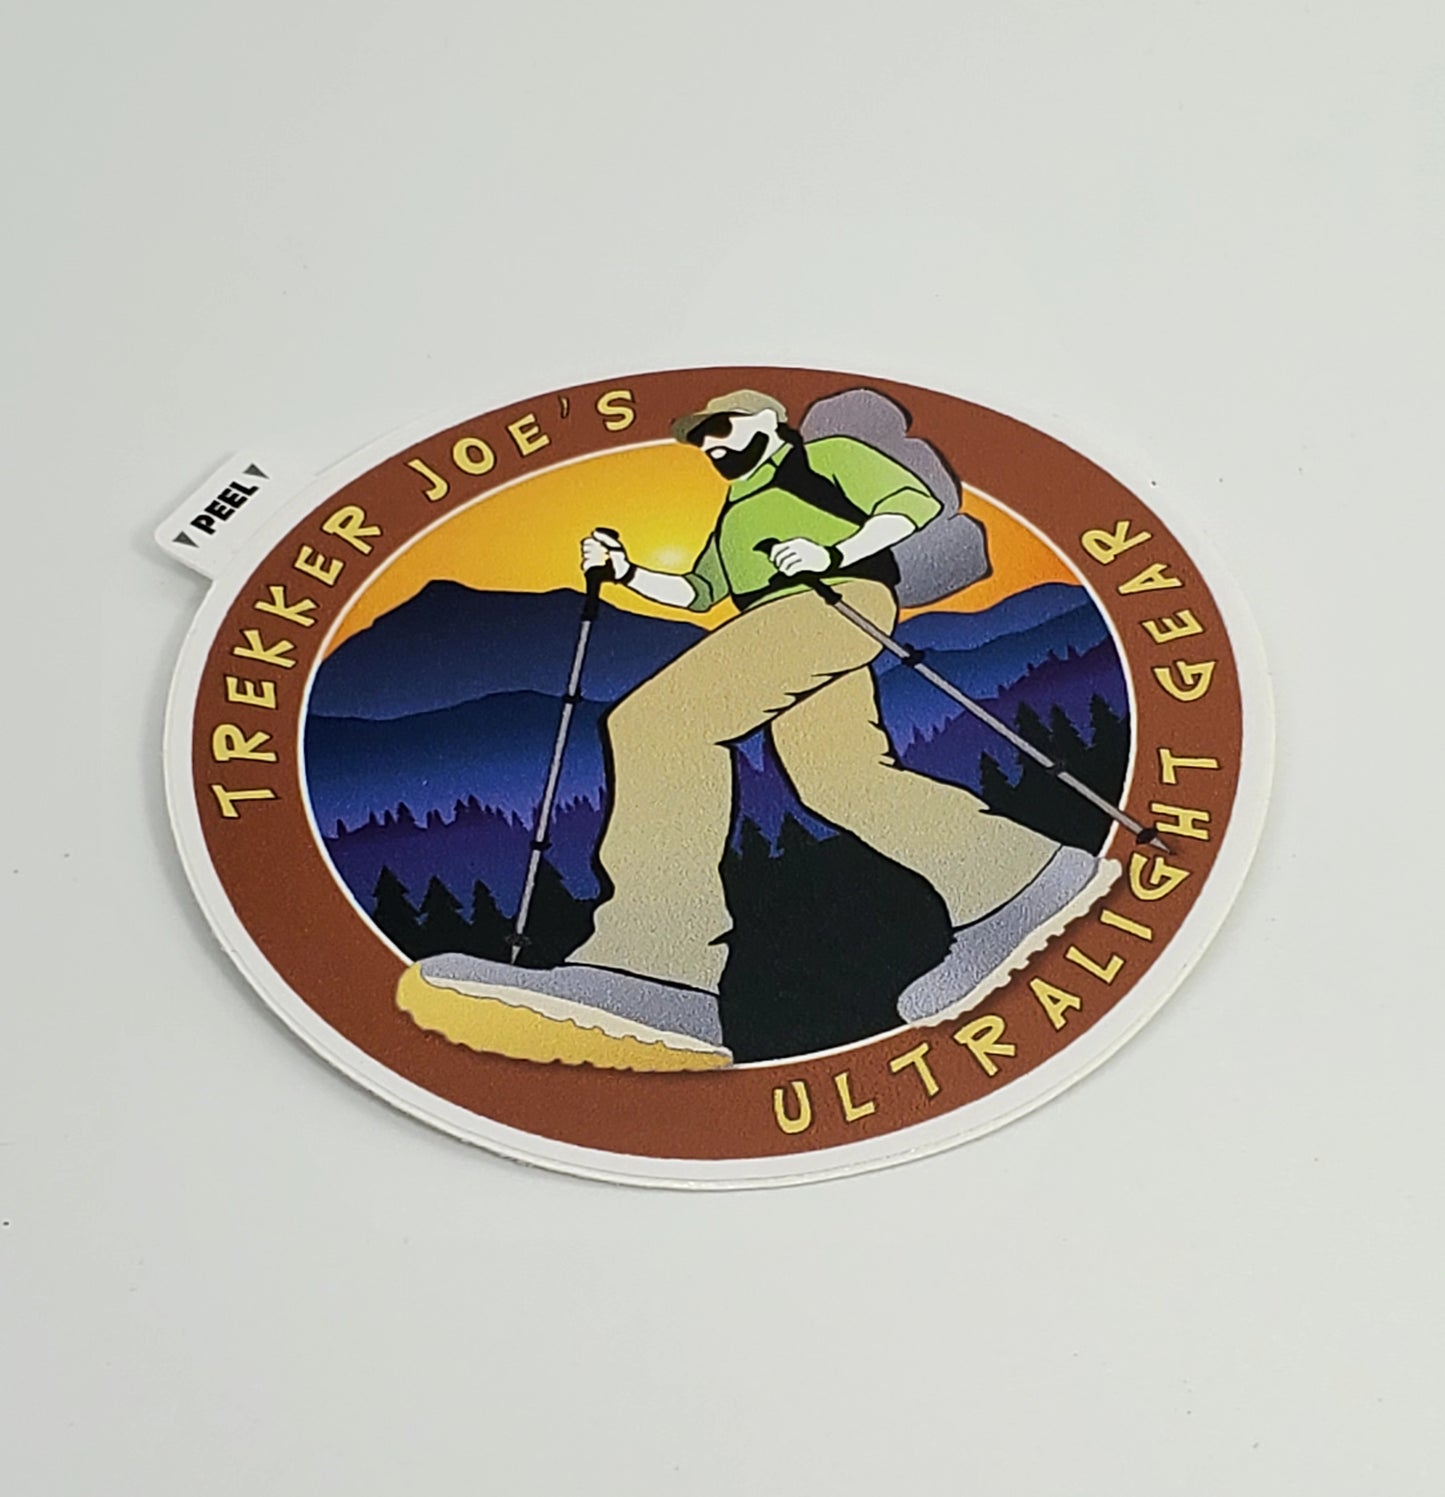 Trekker Joe's brand adventure sticker - high-quality vinyl decal